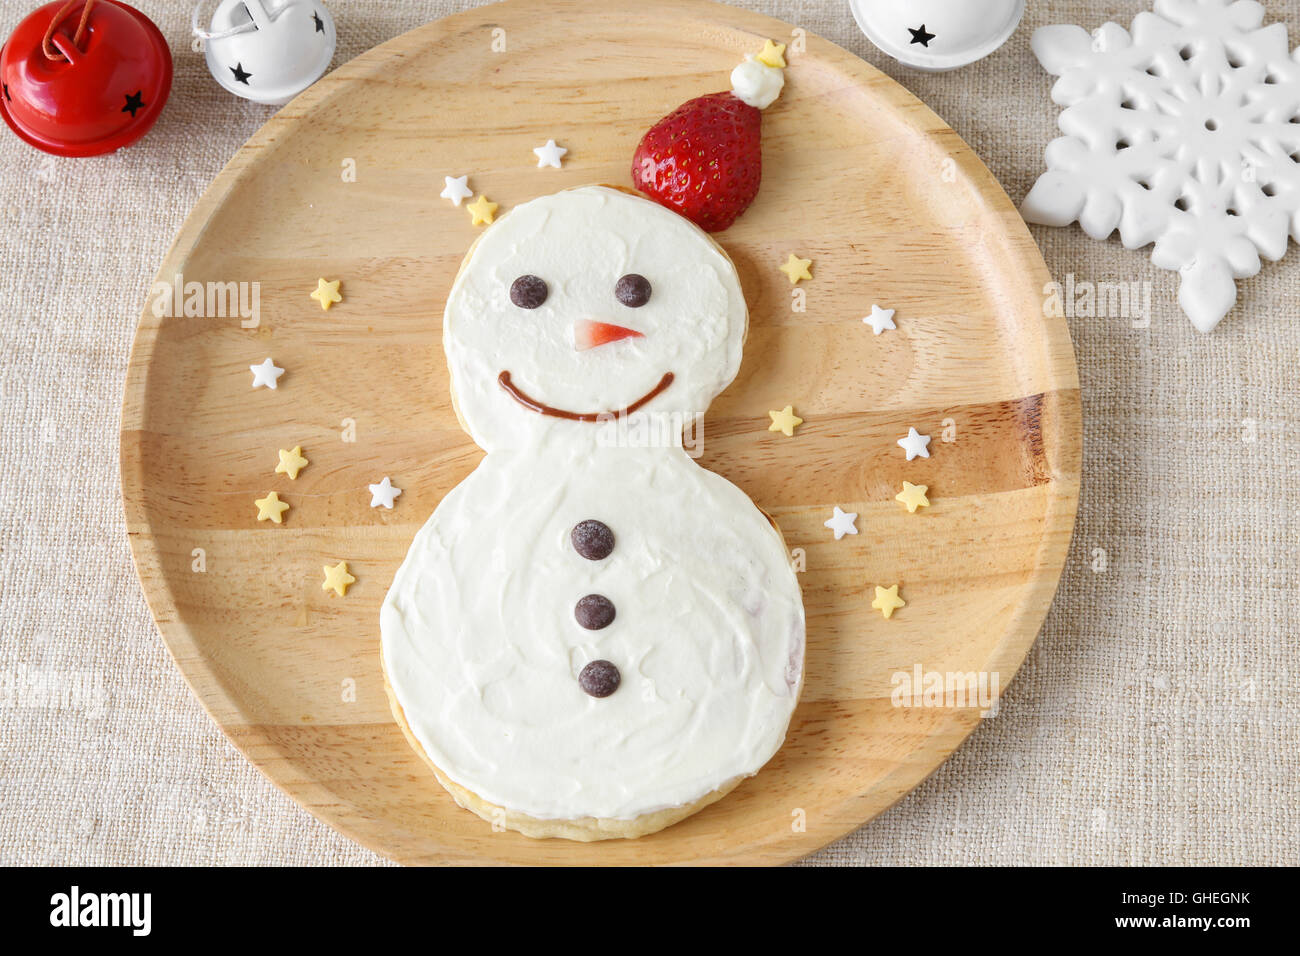 Fun homemade snowman pancake breakfast for kids Stock Photo